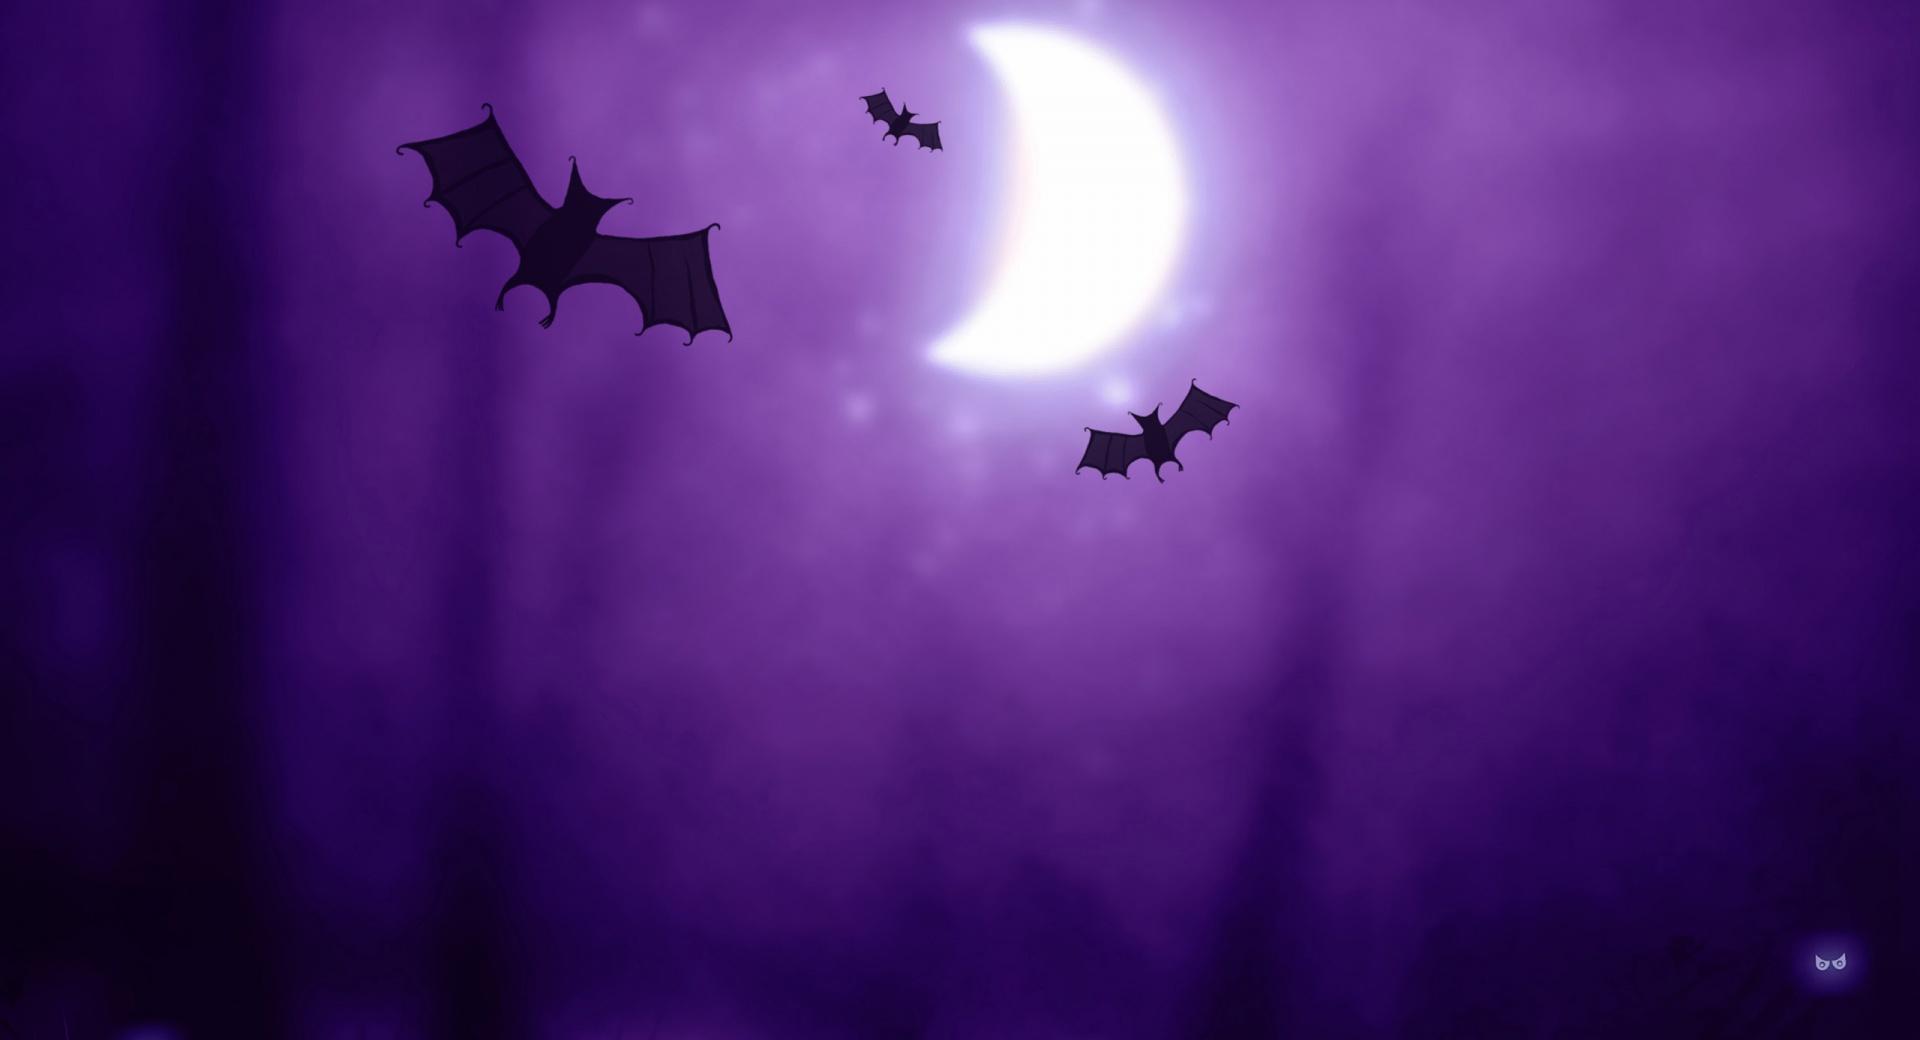 Bats  Halloween wallpapers HD quality